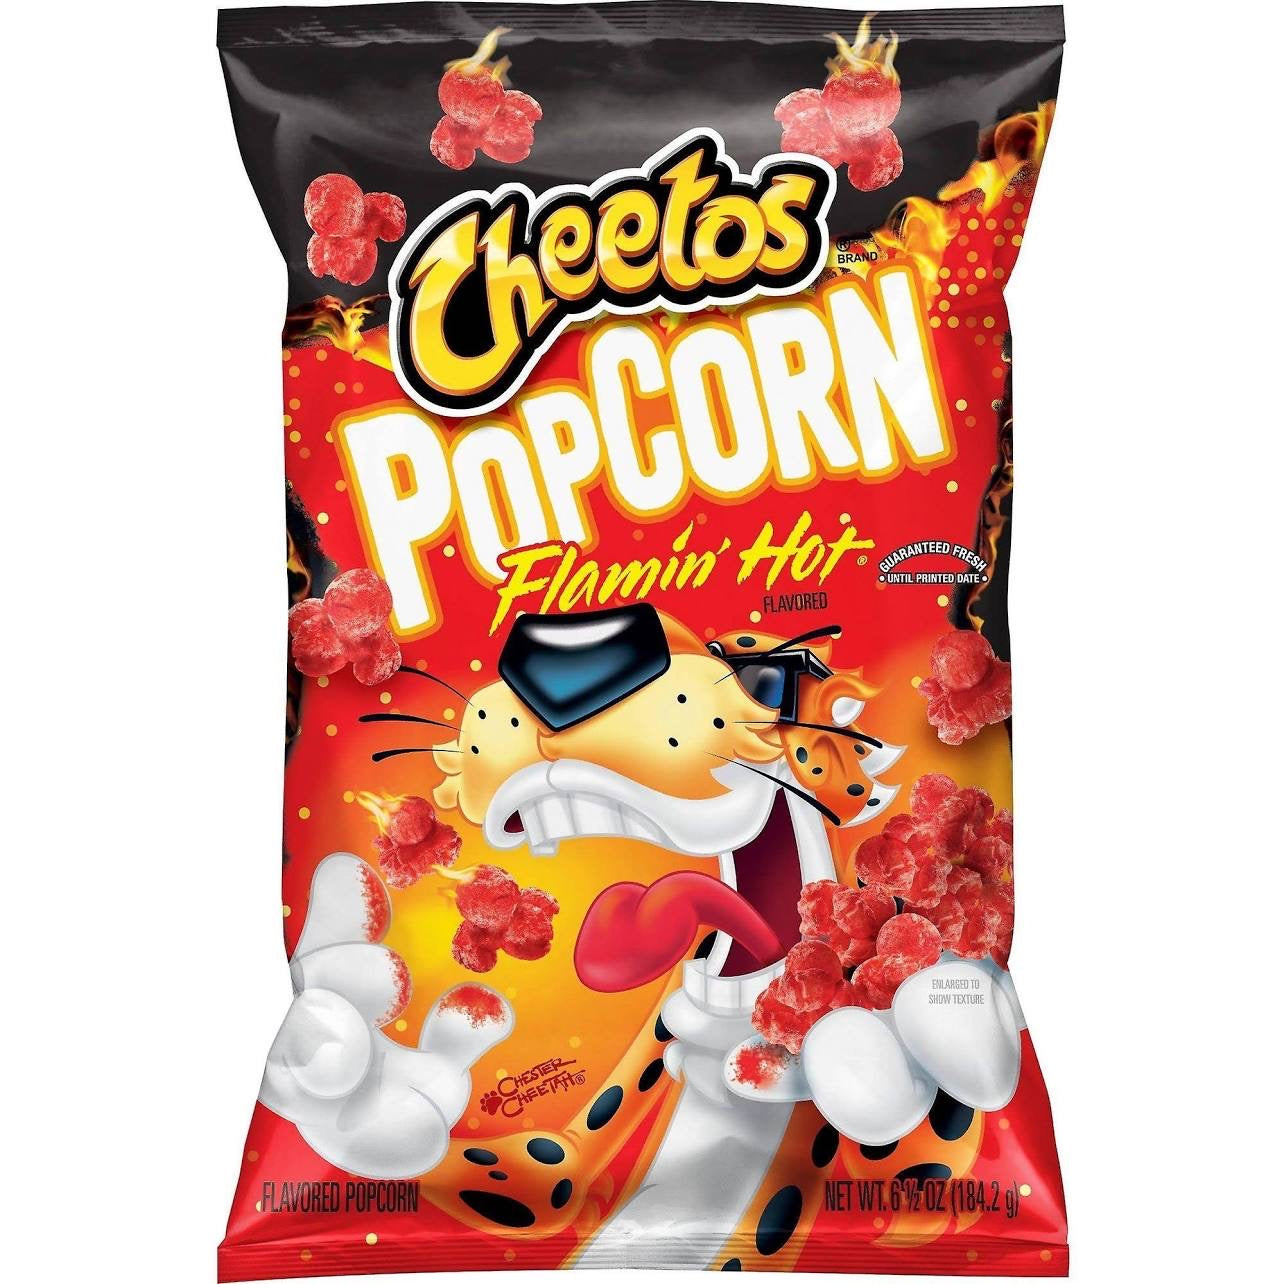 Cheetos flaming hot popcorn 184g rare! On sale